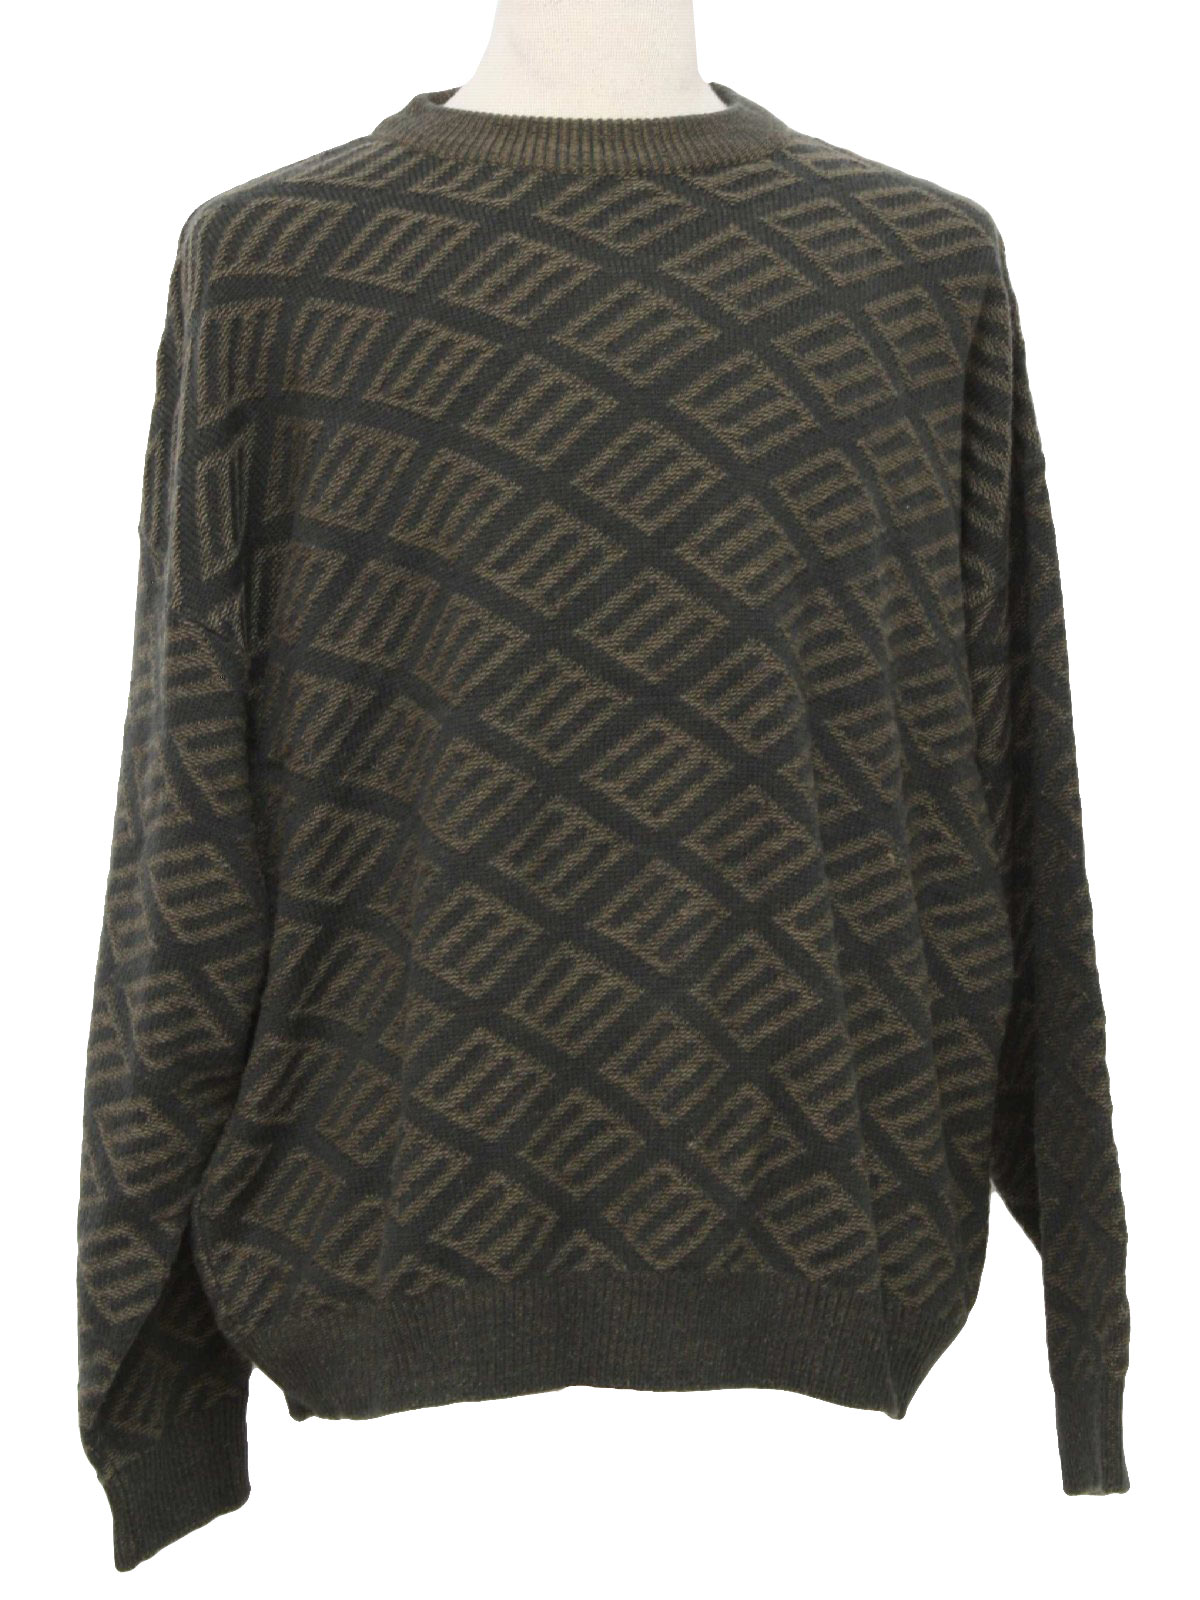 90's Vintage Sweater: 90s -David Taylor- mens grey and tan geometric ...